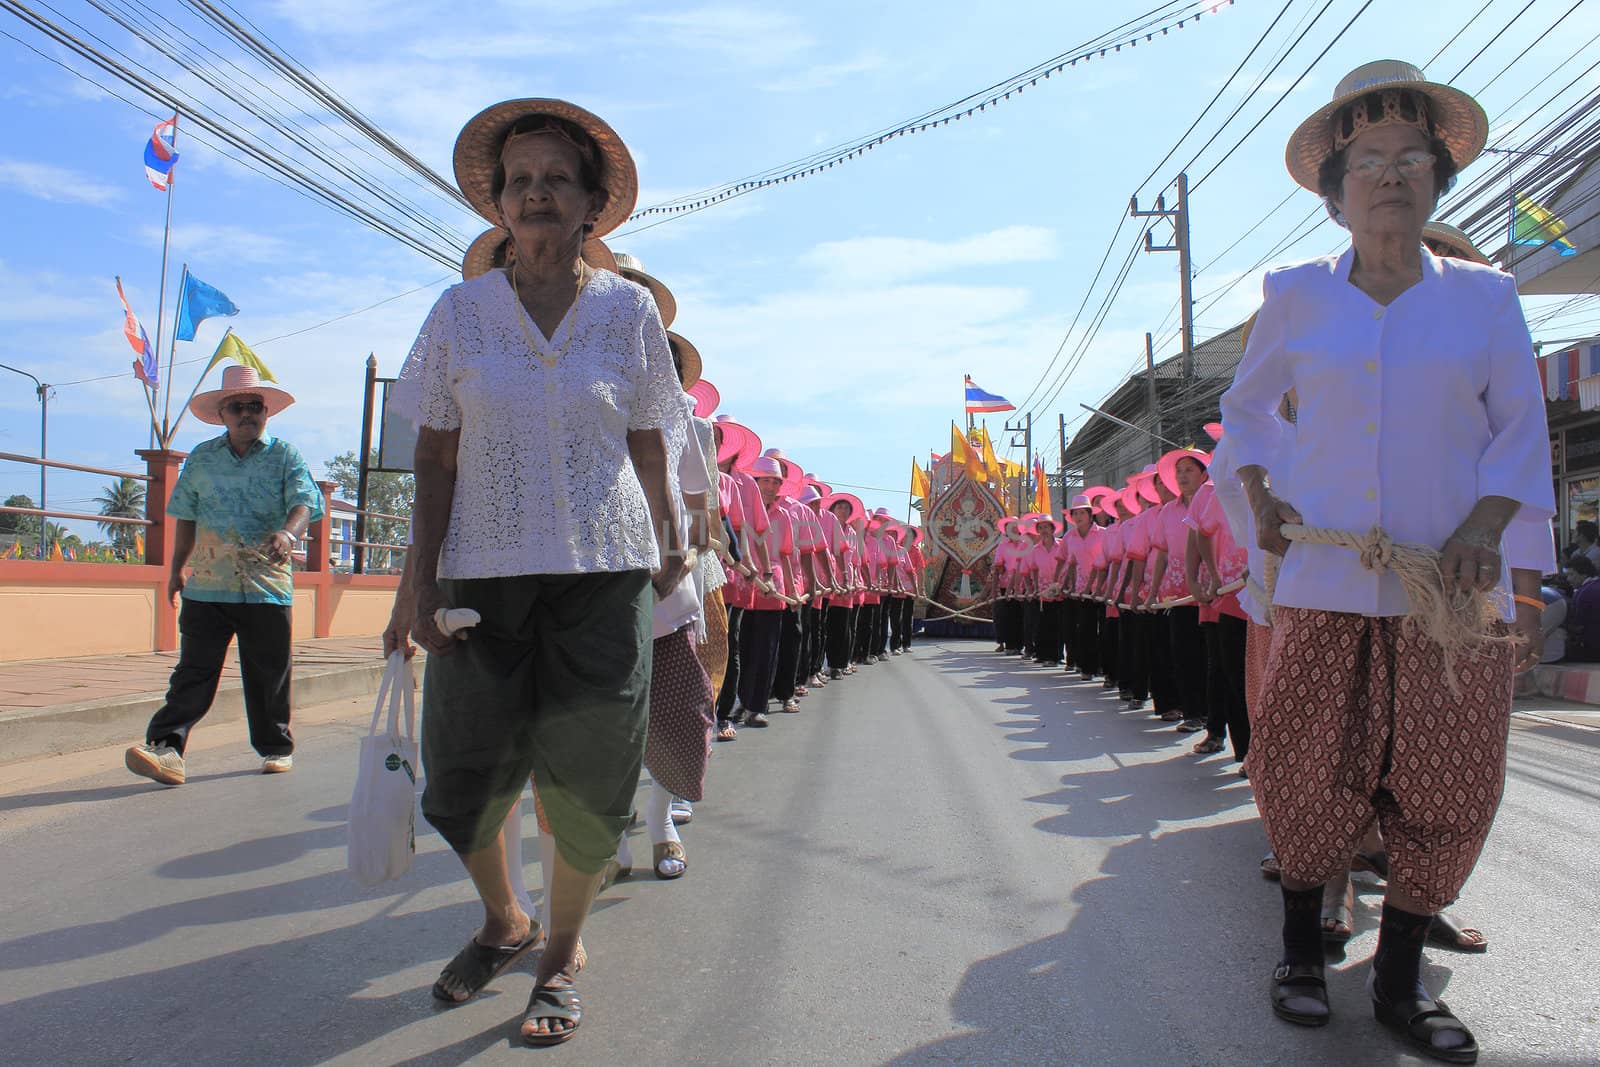 Chak Phra Festivals by olovedog